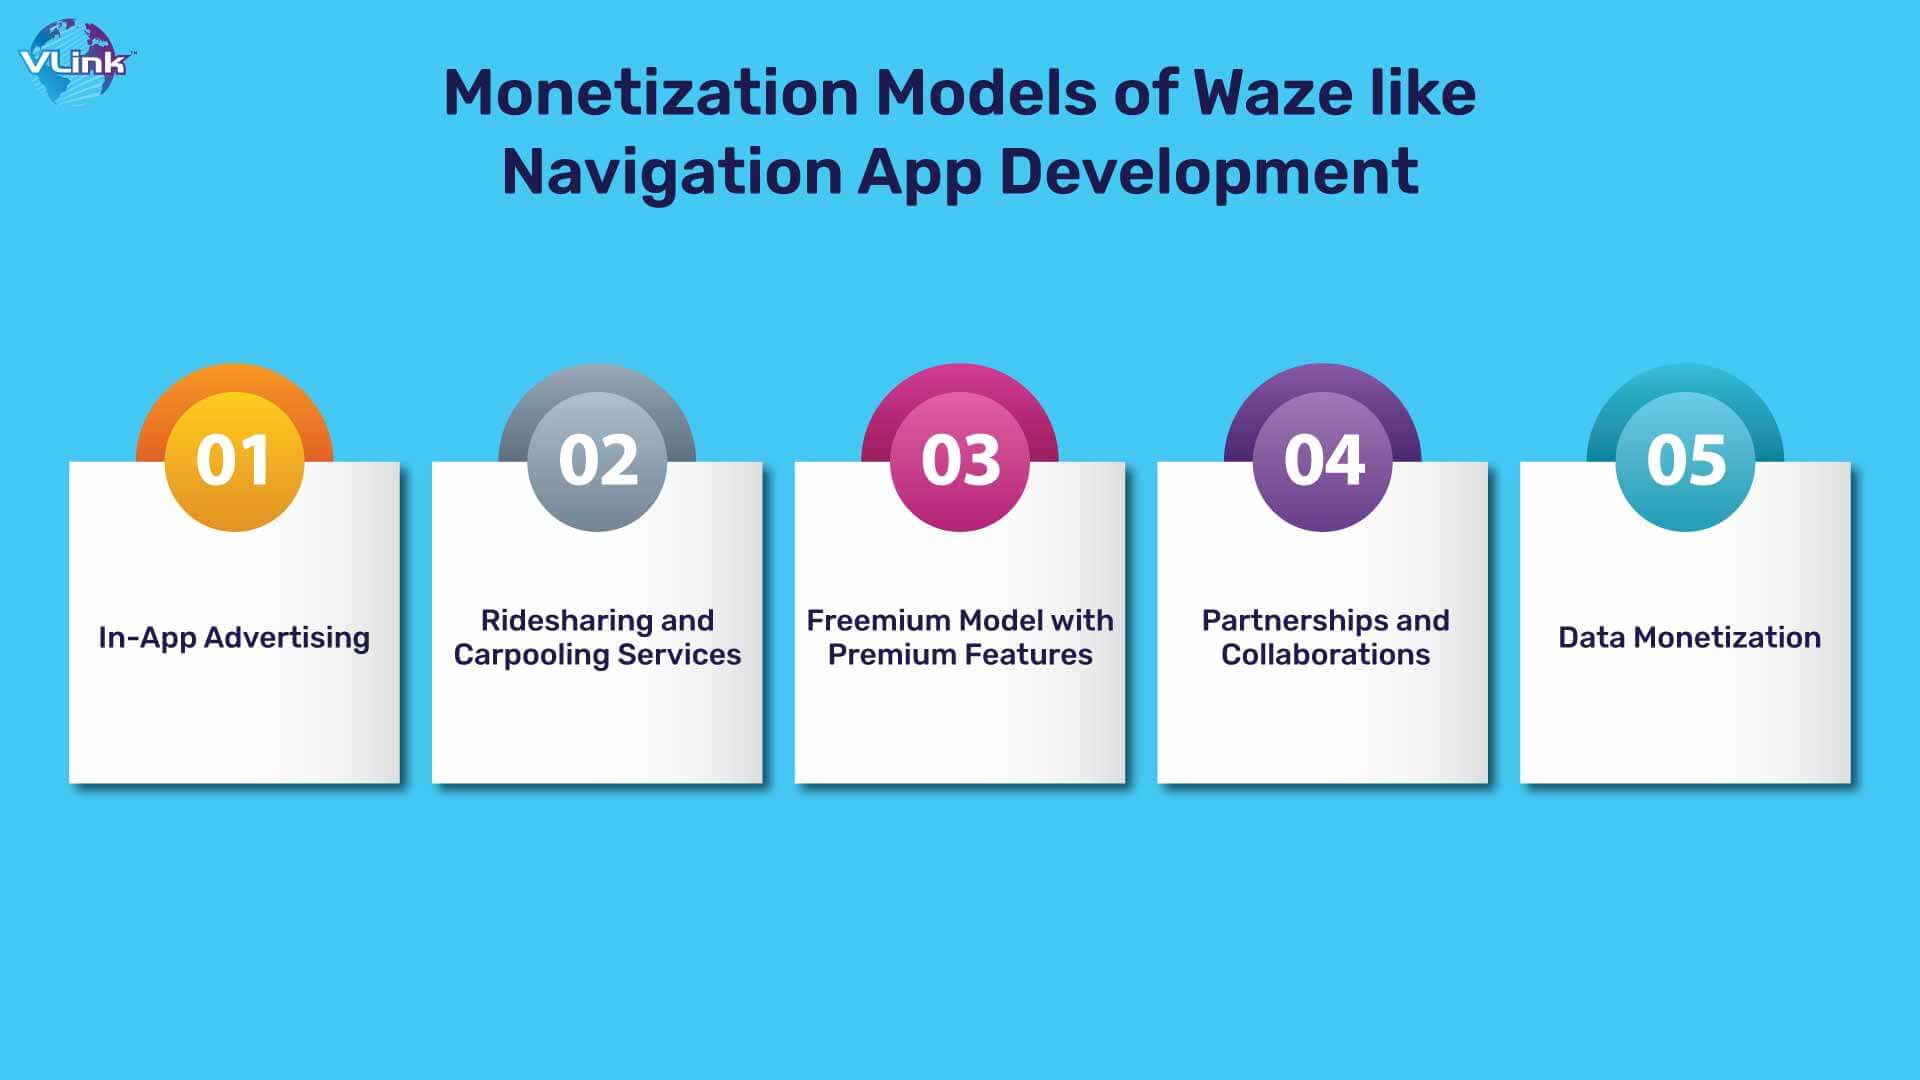 What are the Monetization Models of Waze like Navigation App Development?